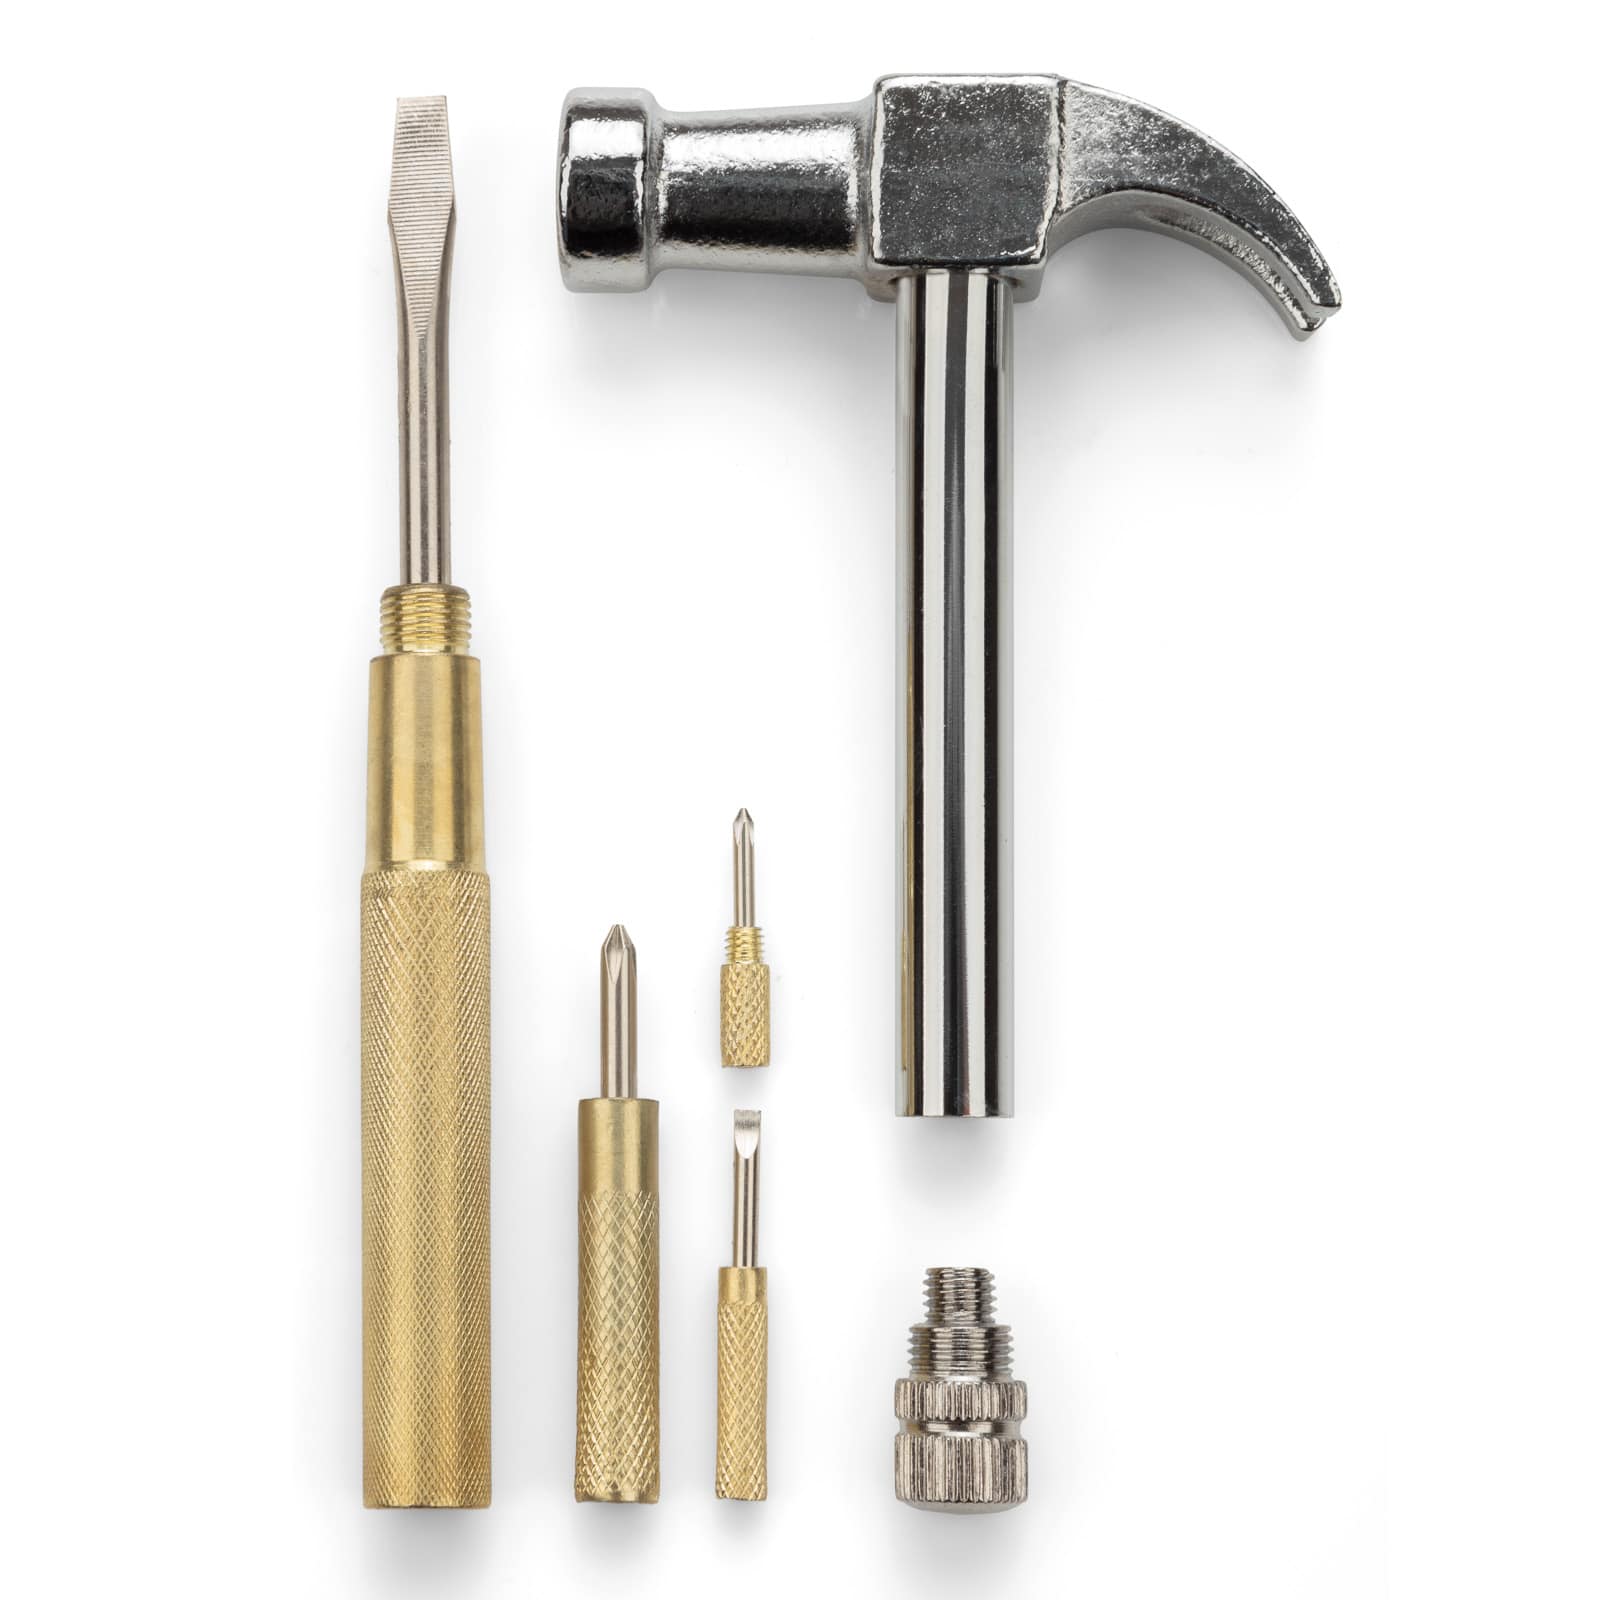 Pack of: 1 PH-00500 5 Piece Hammer & Screwdriver Set 